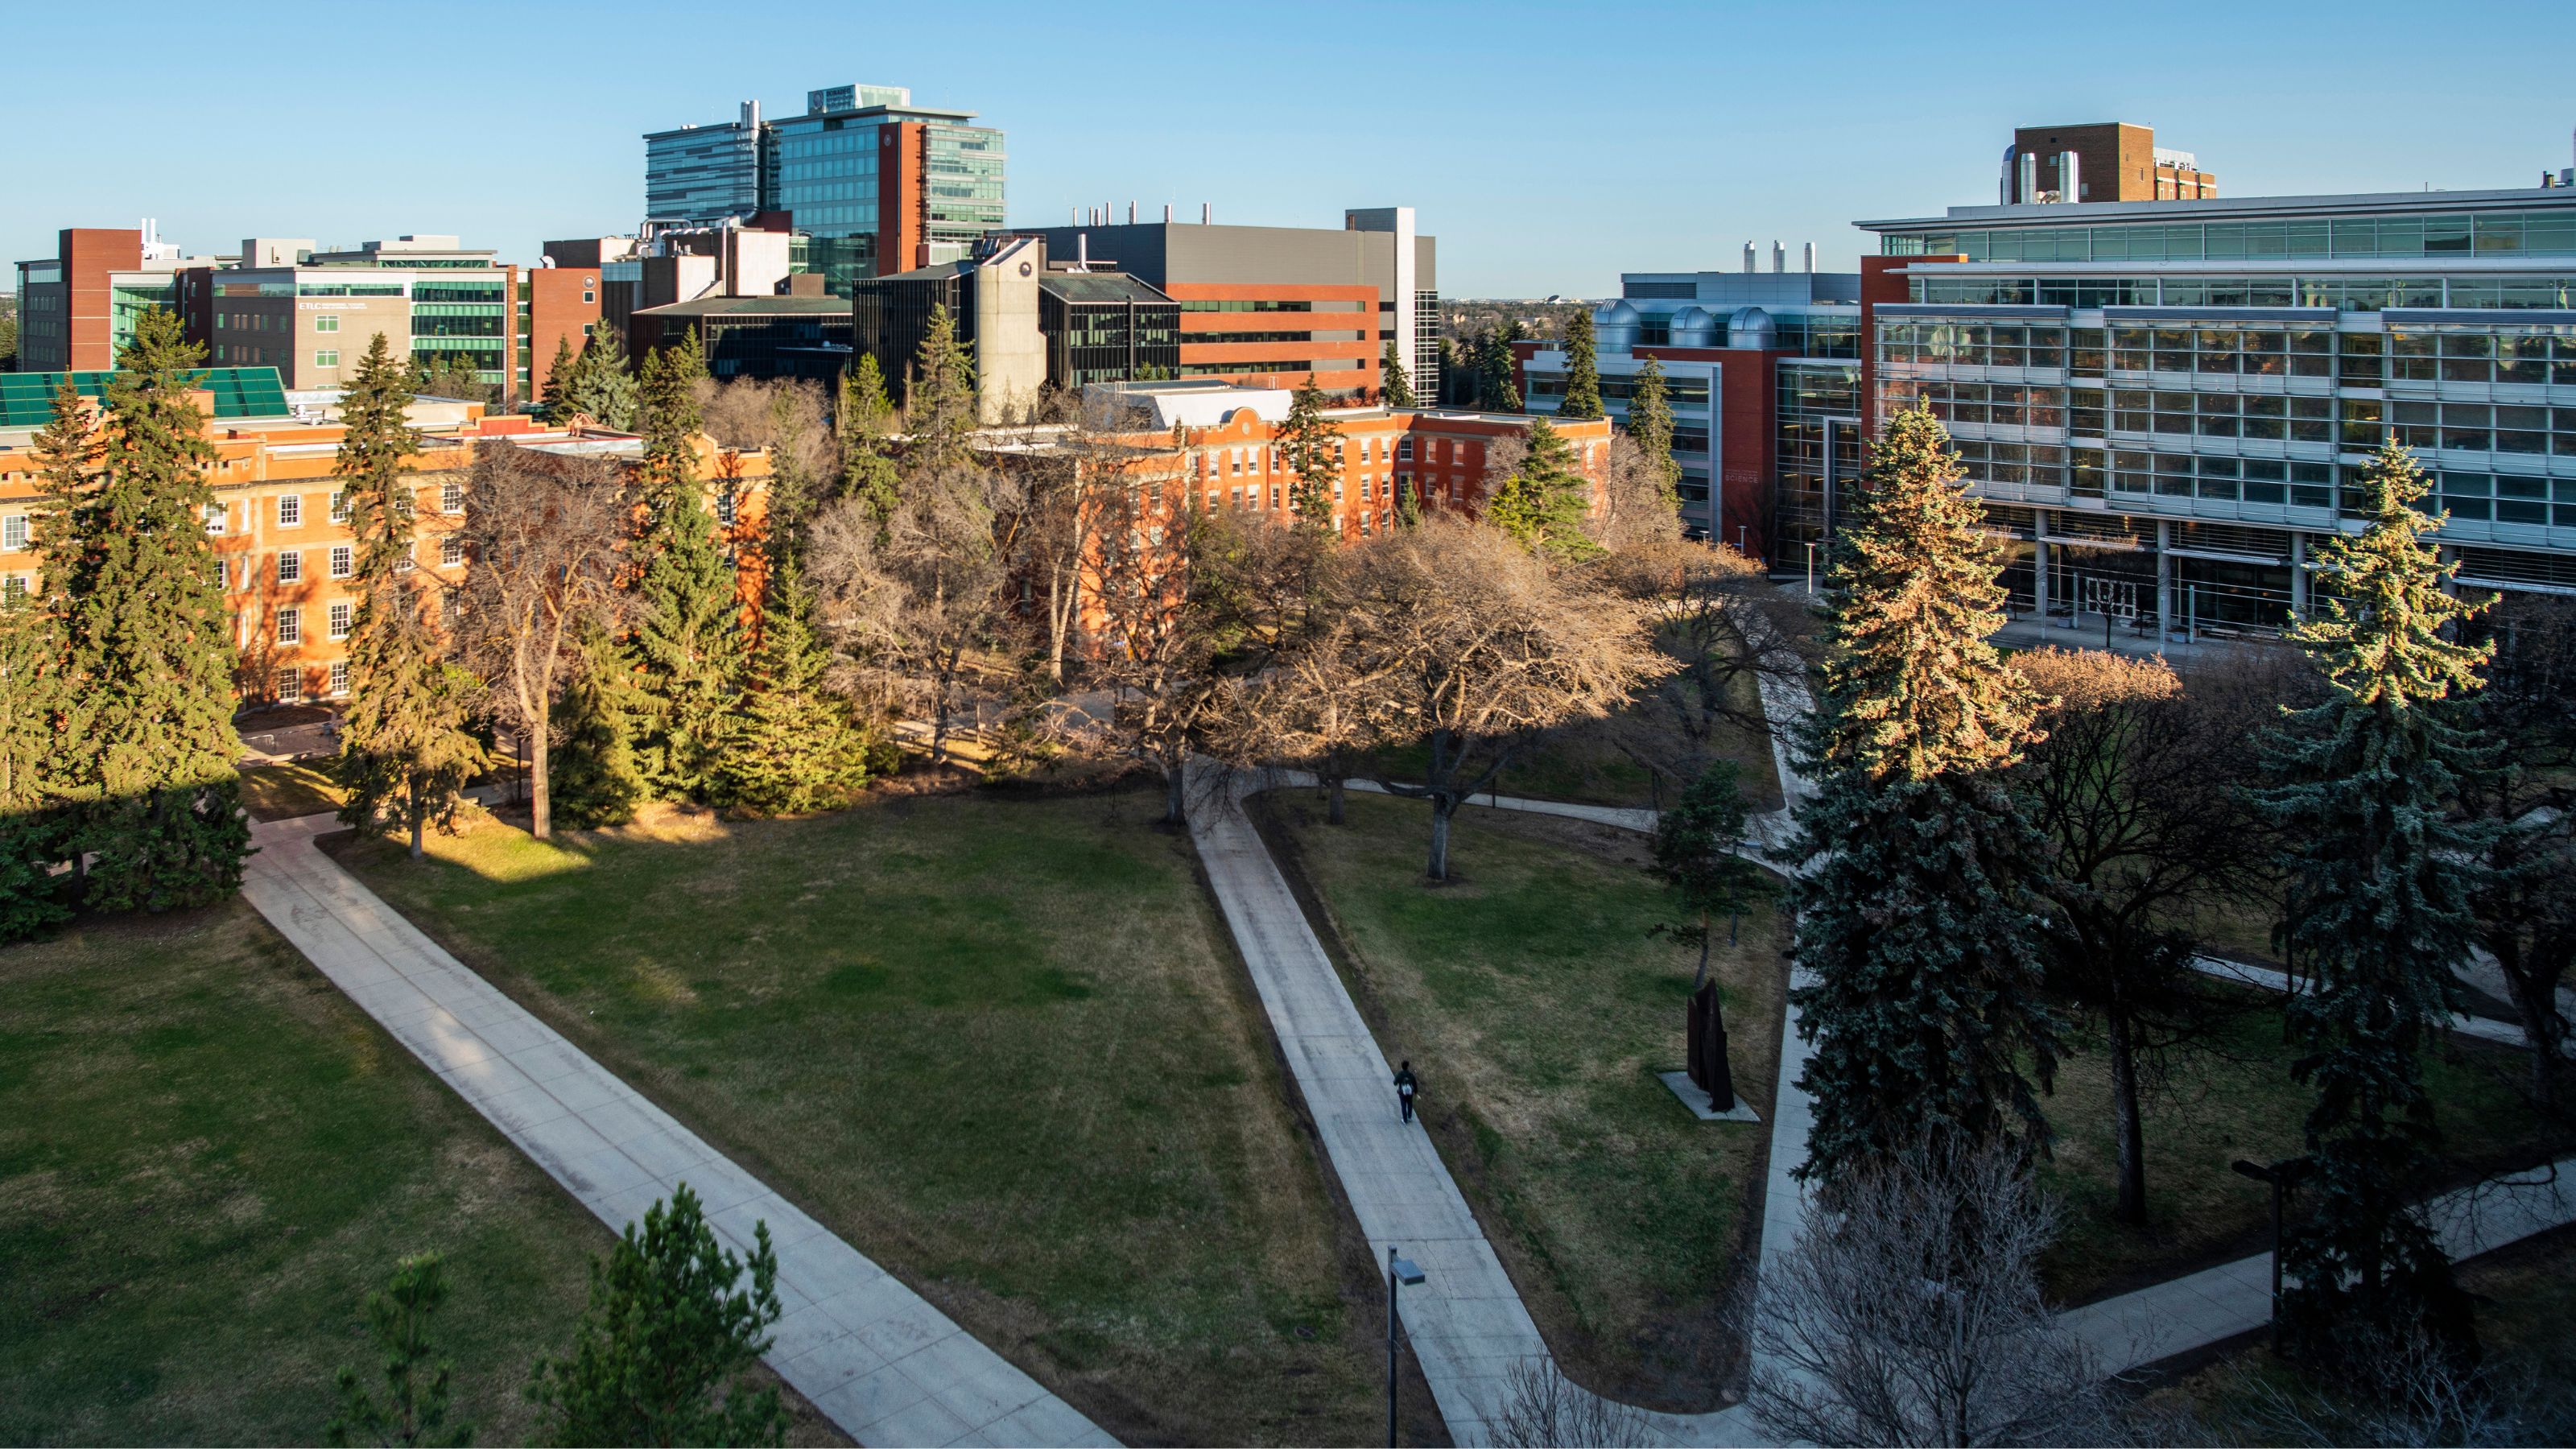 The University of Alberta Main Quad, on May 1, 2020